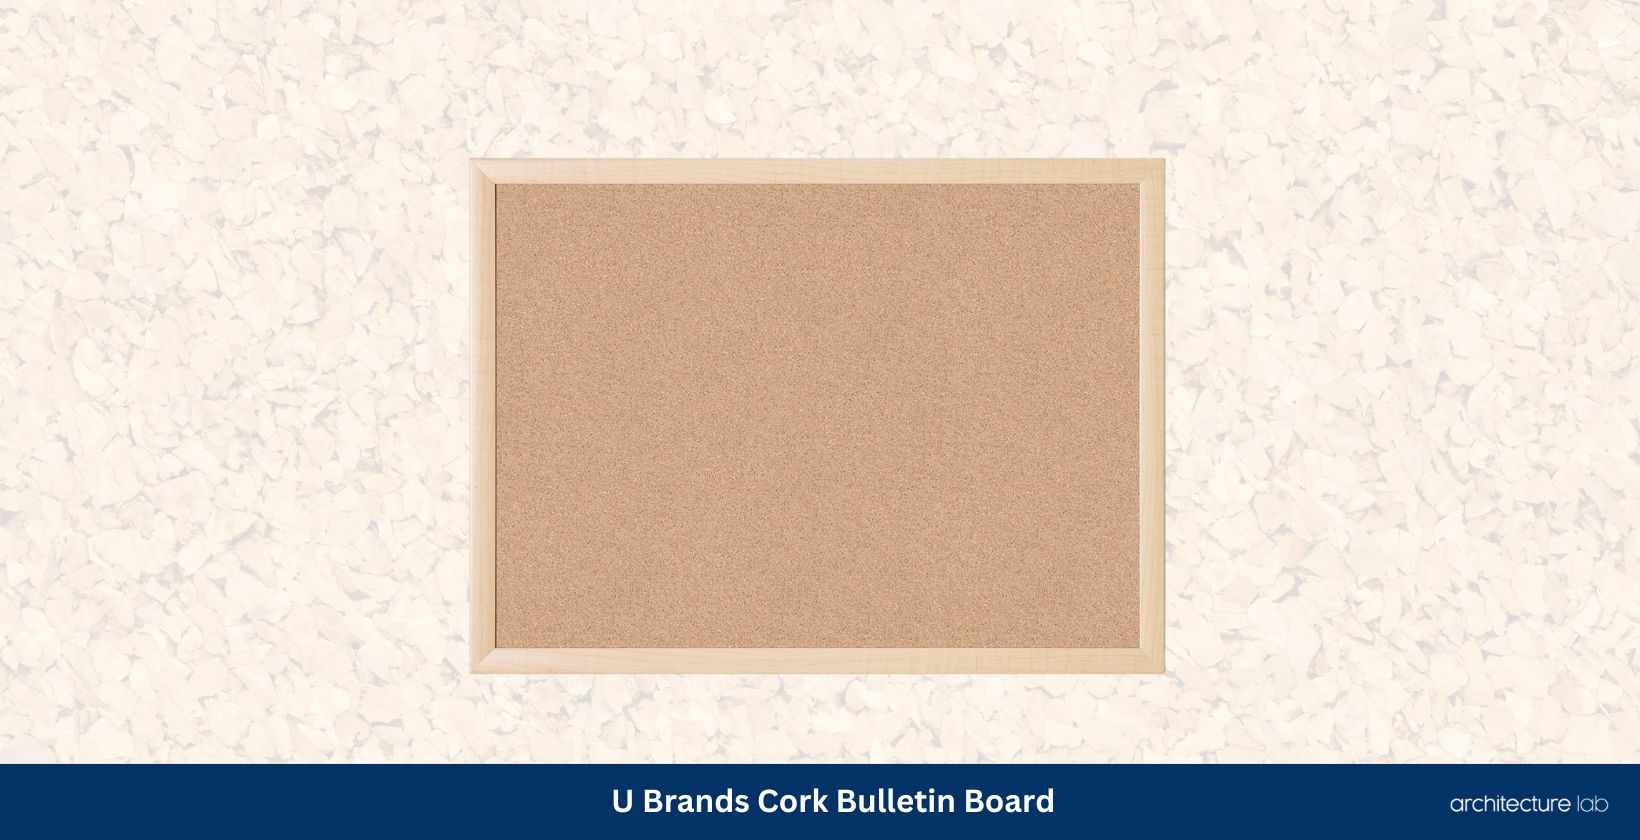 U brands cork bulletin board